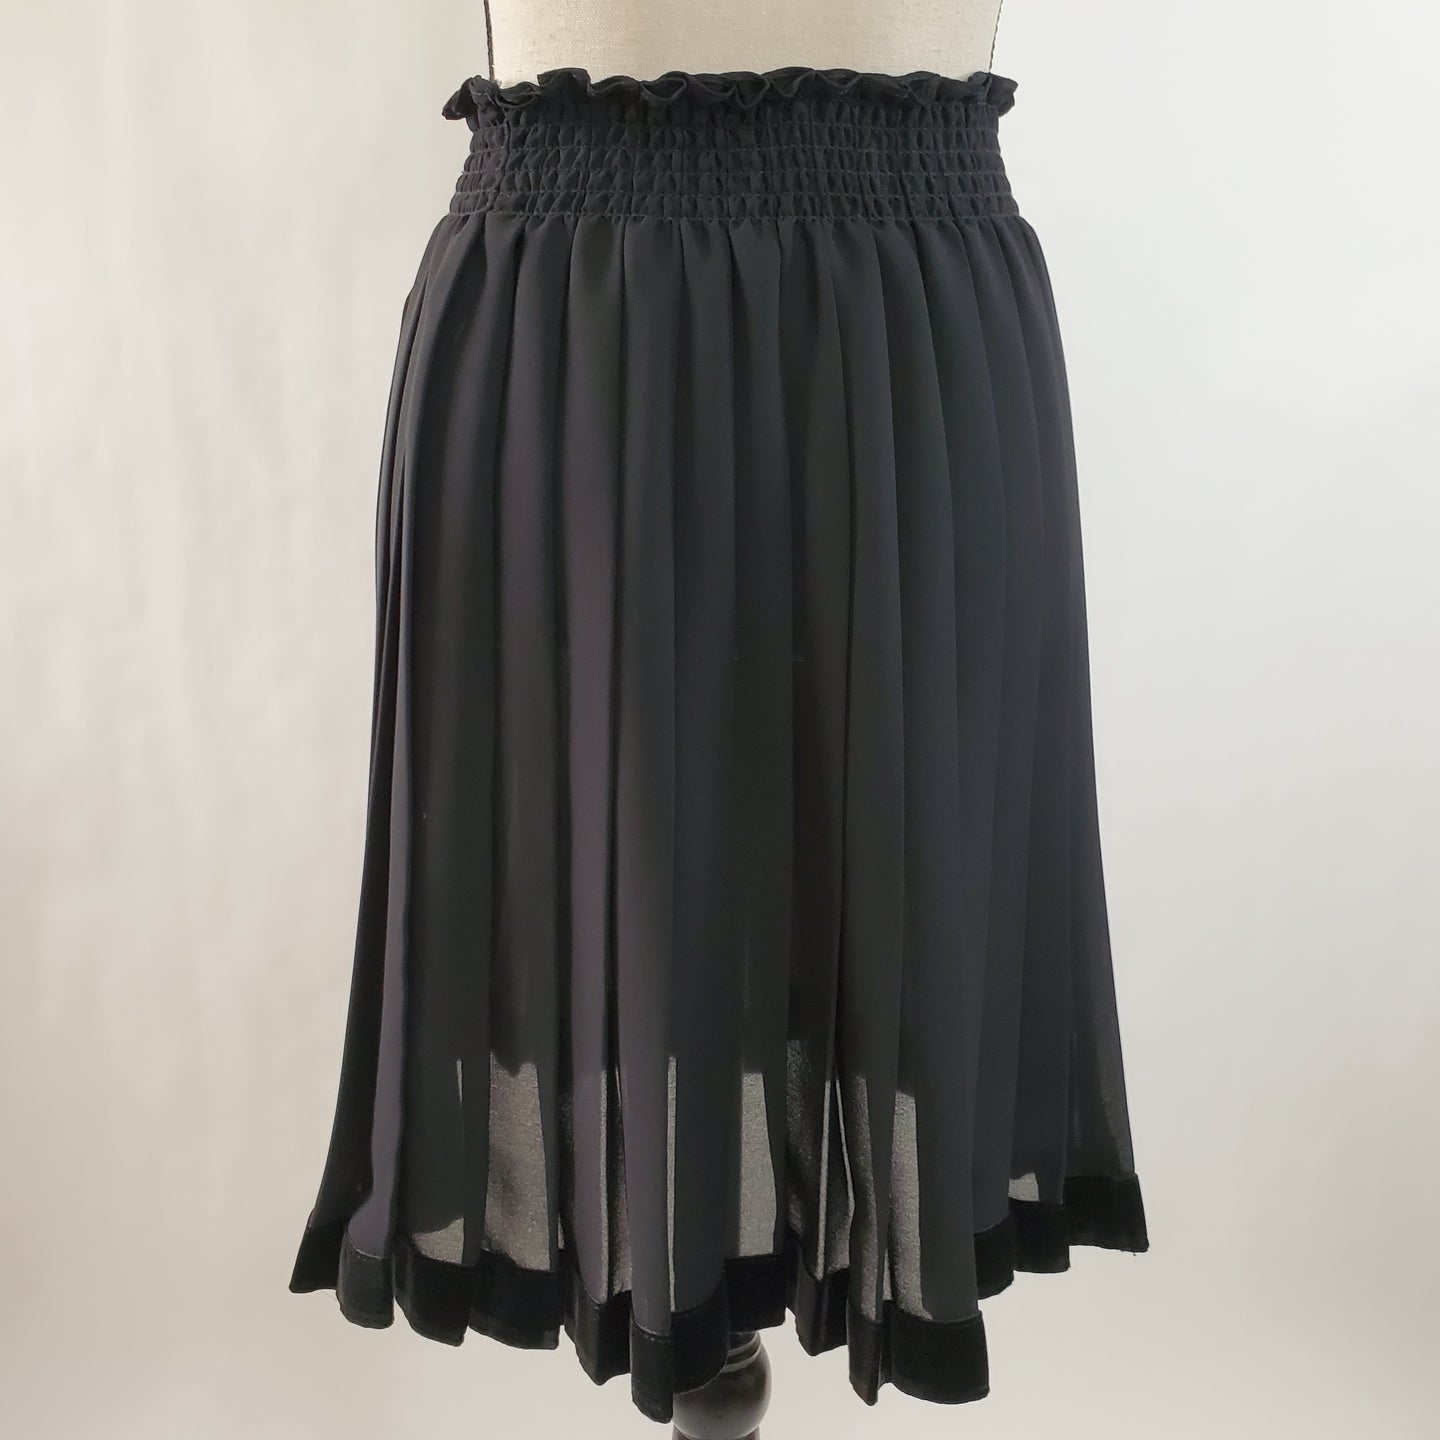 Vintage Black Pleated Sheer Womens Skirt with Velvet Trim - One Size